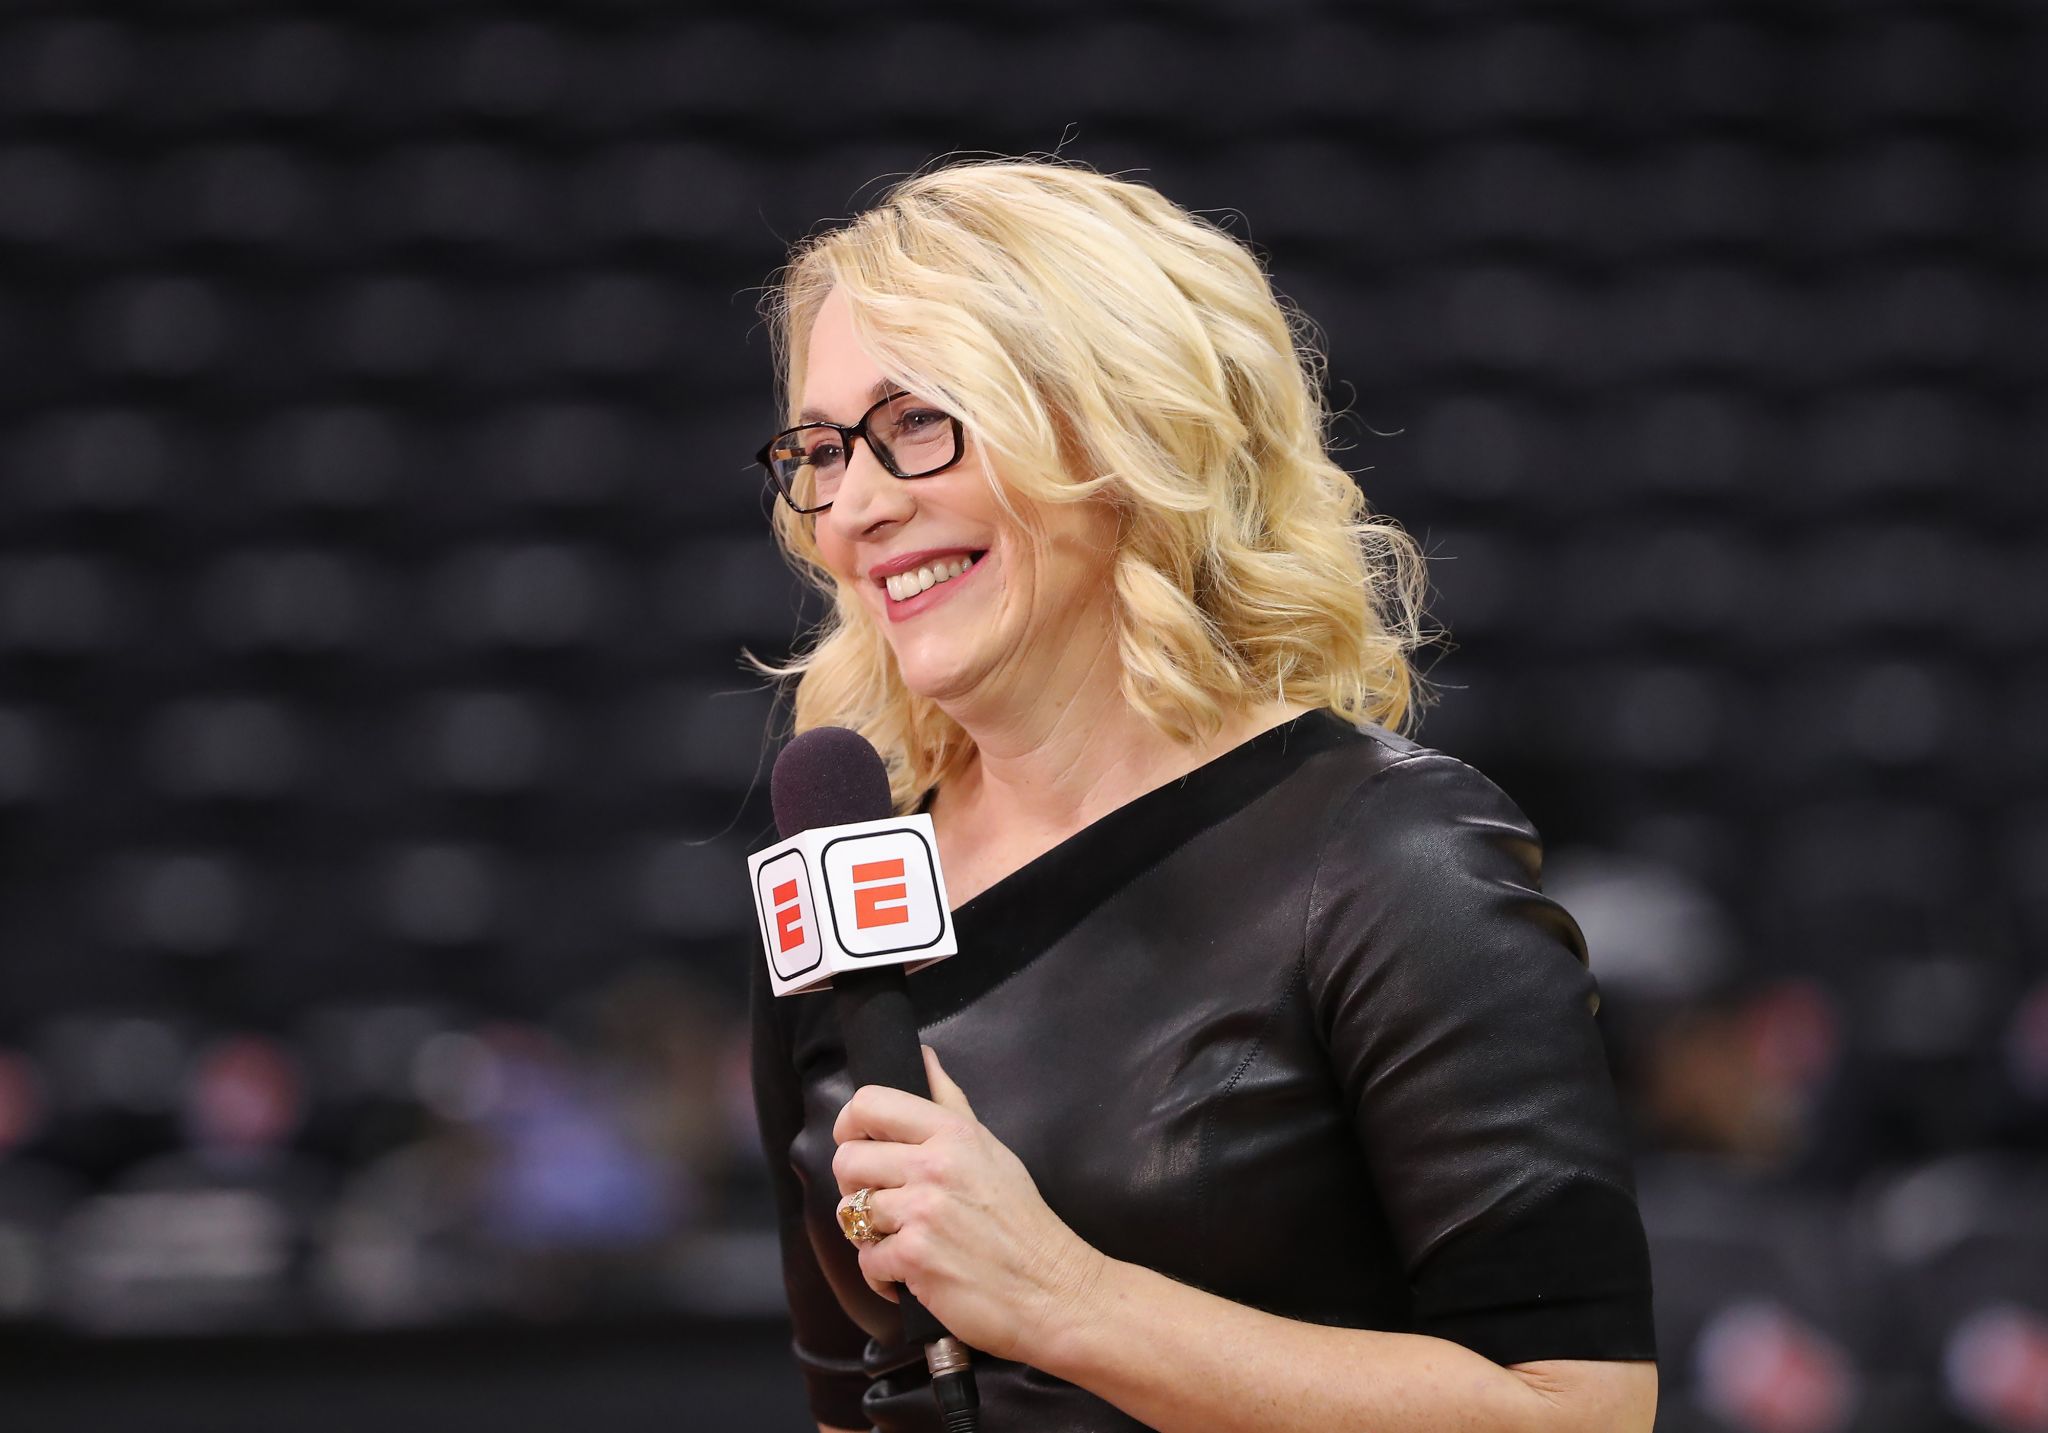 NBA broadcaster Doris Burke tests positive for coronavirus.